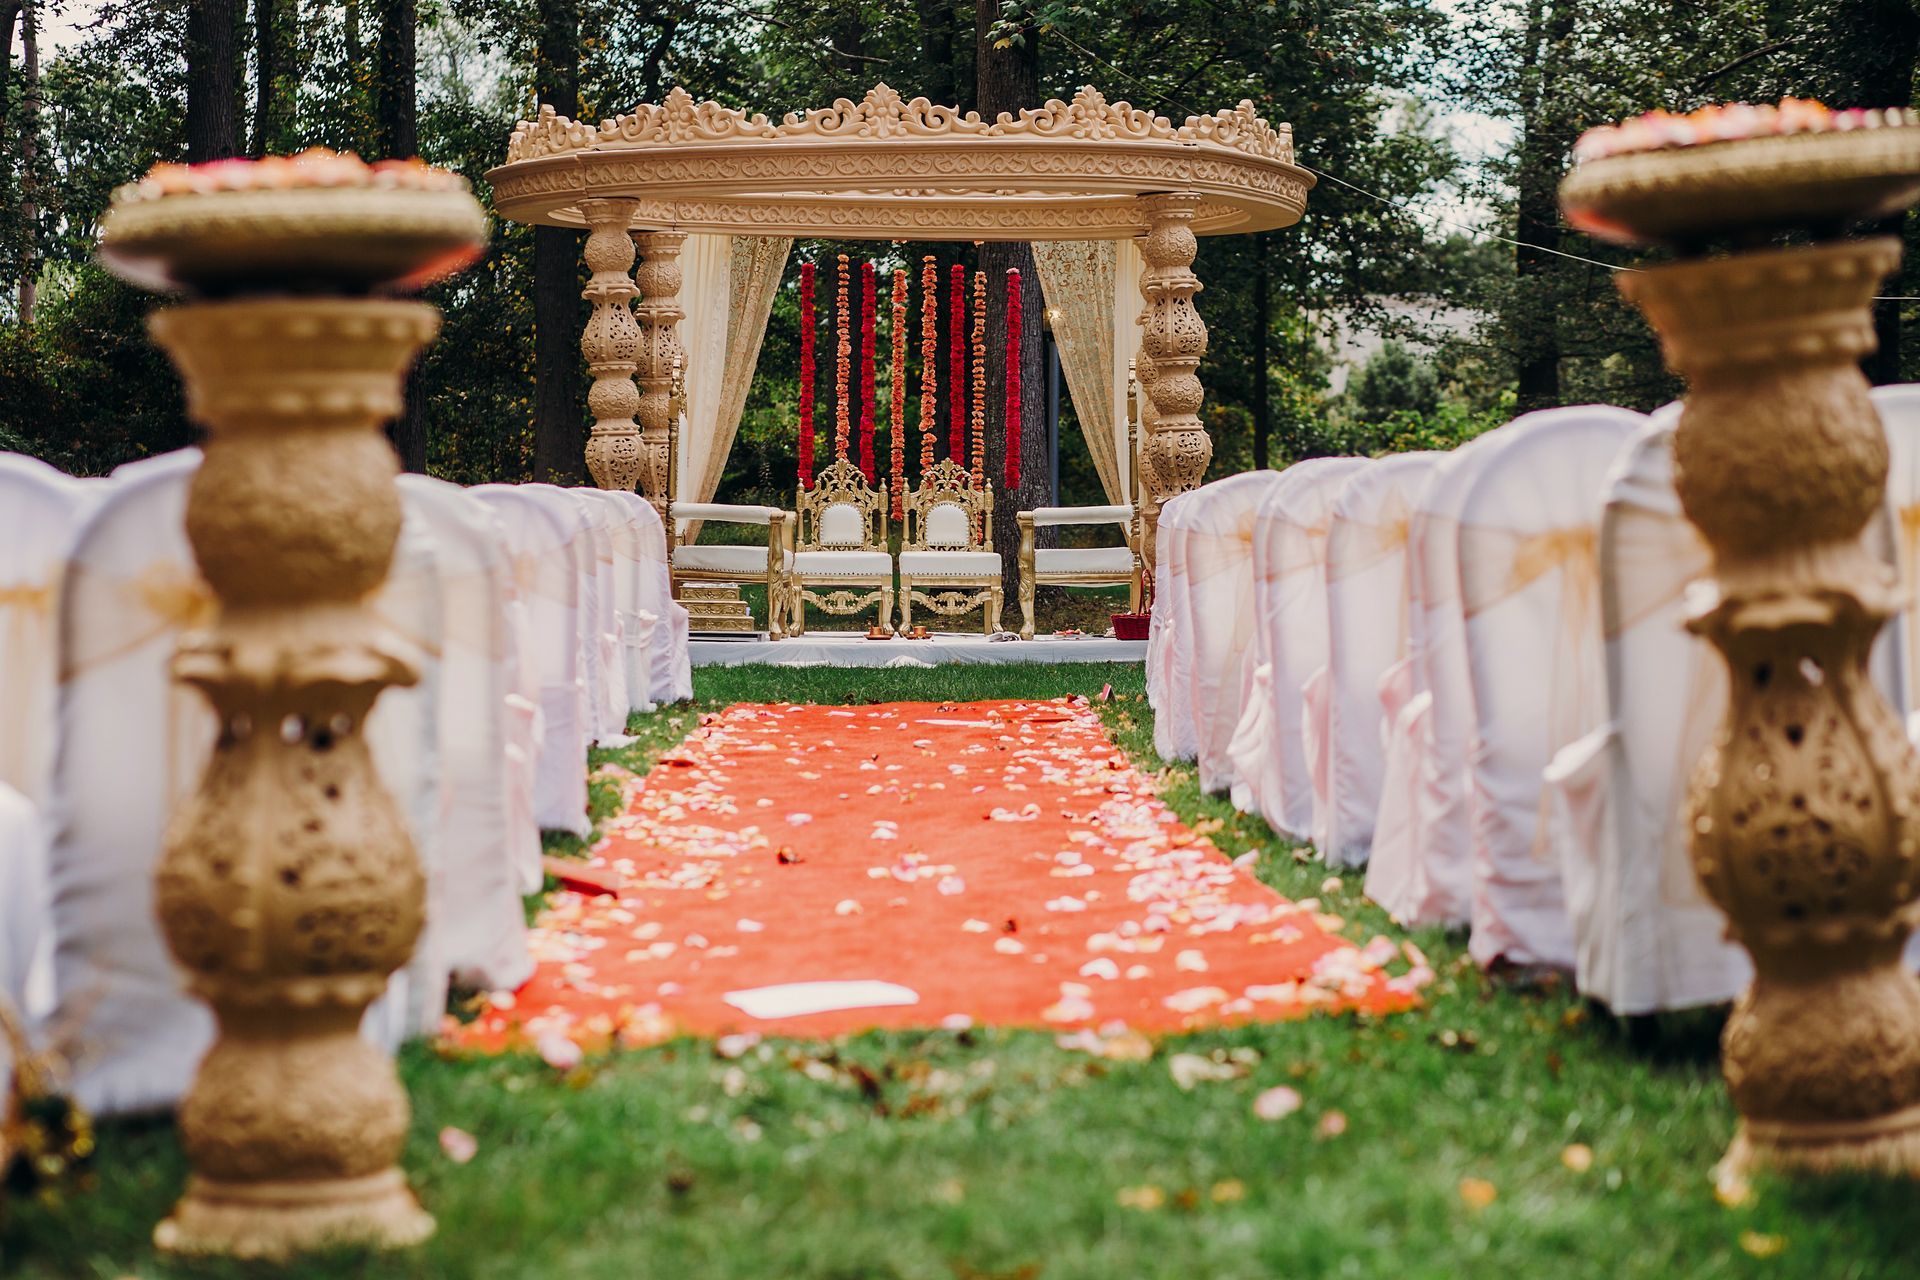 Hindu wedding decor and themes